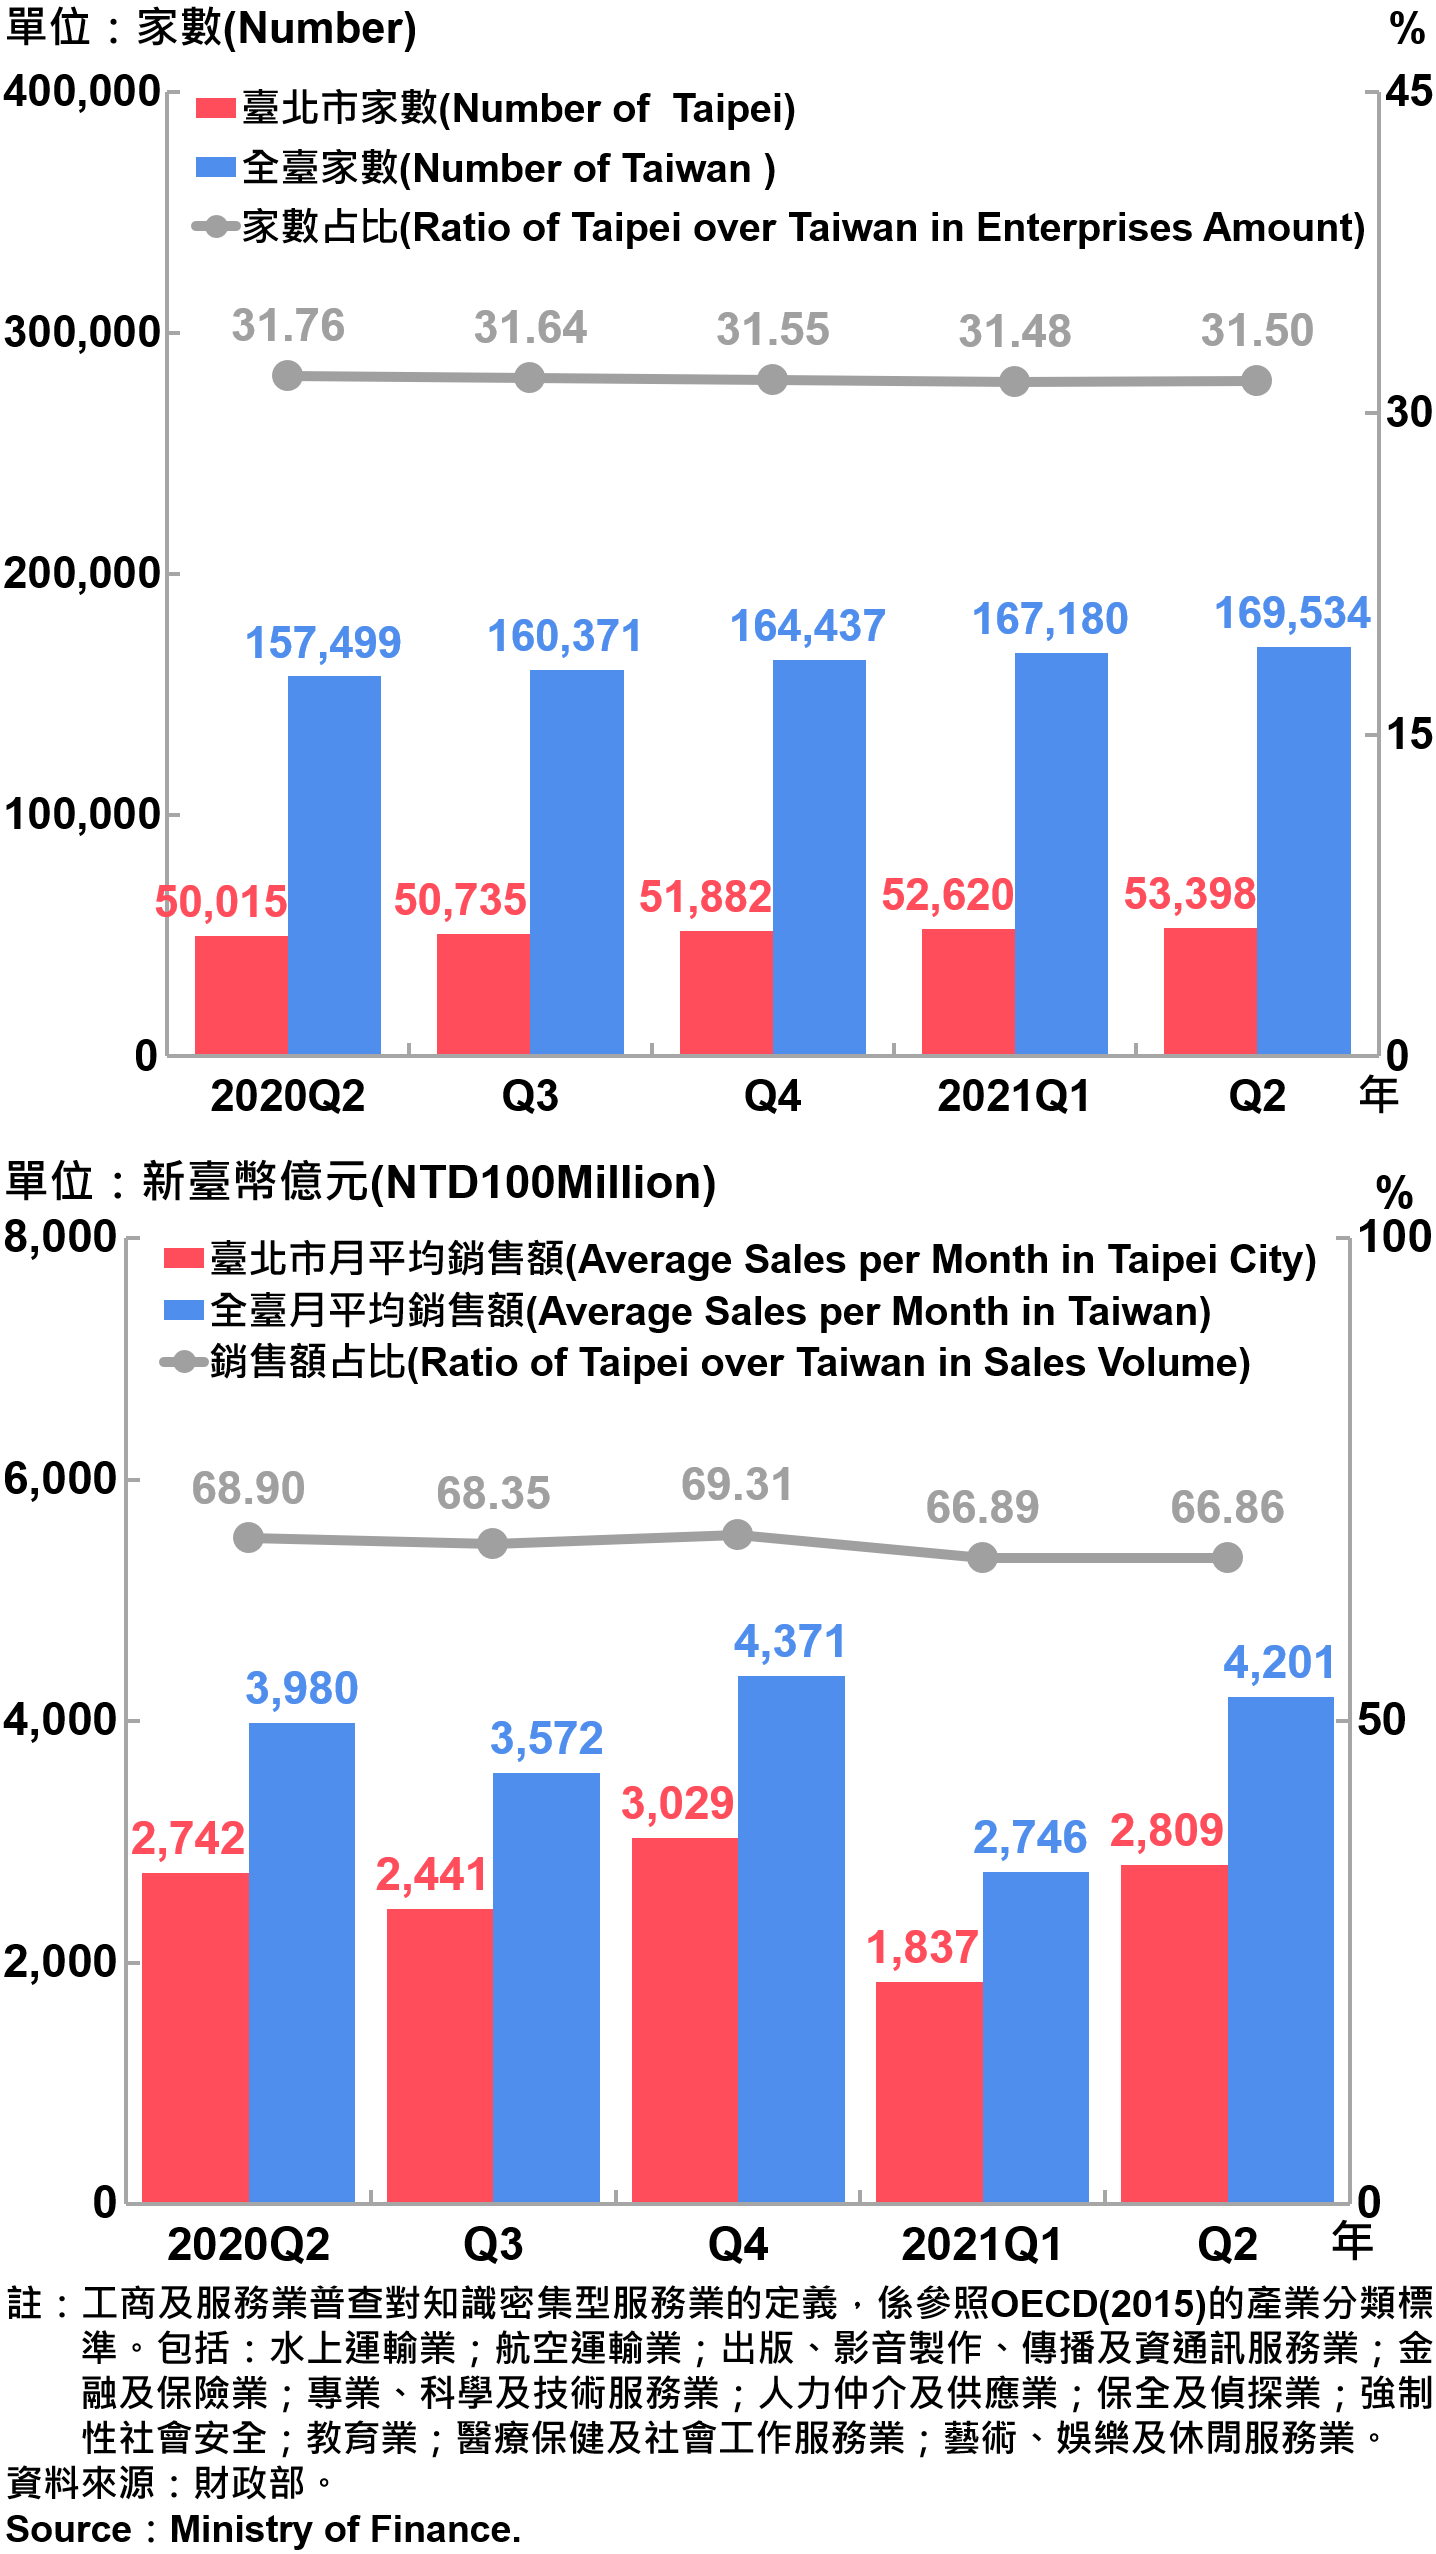 臺北市知識密集型服務業之家數及銷售額—2021Q2 Statistics Knowledge Intensive Service Industry in Taipei City—2021Q2